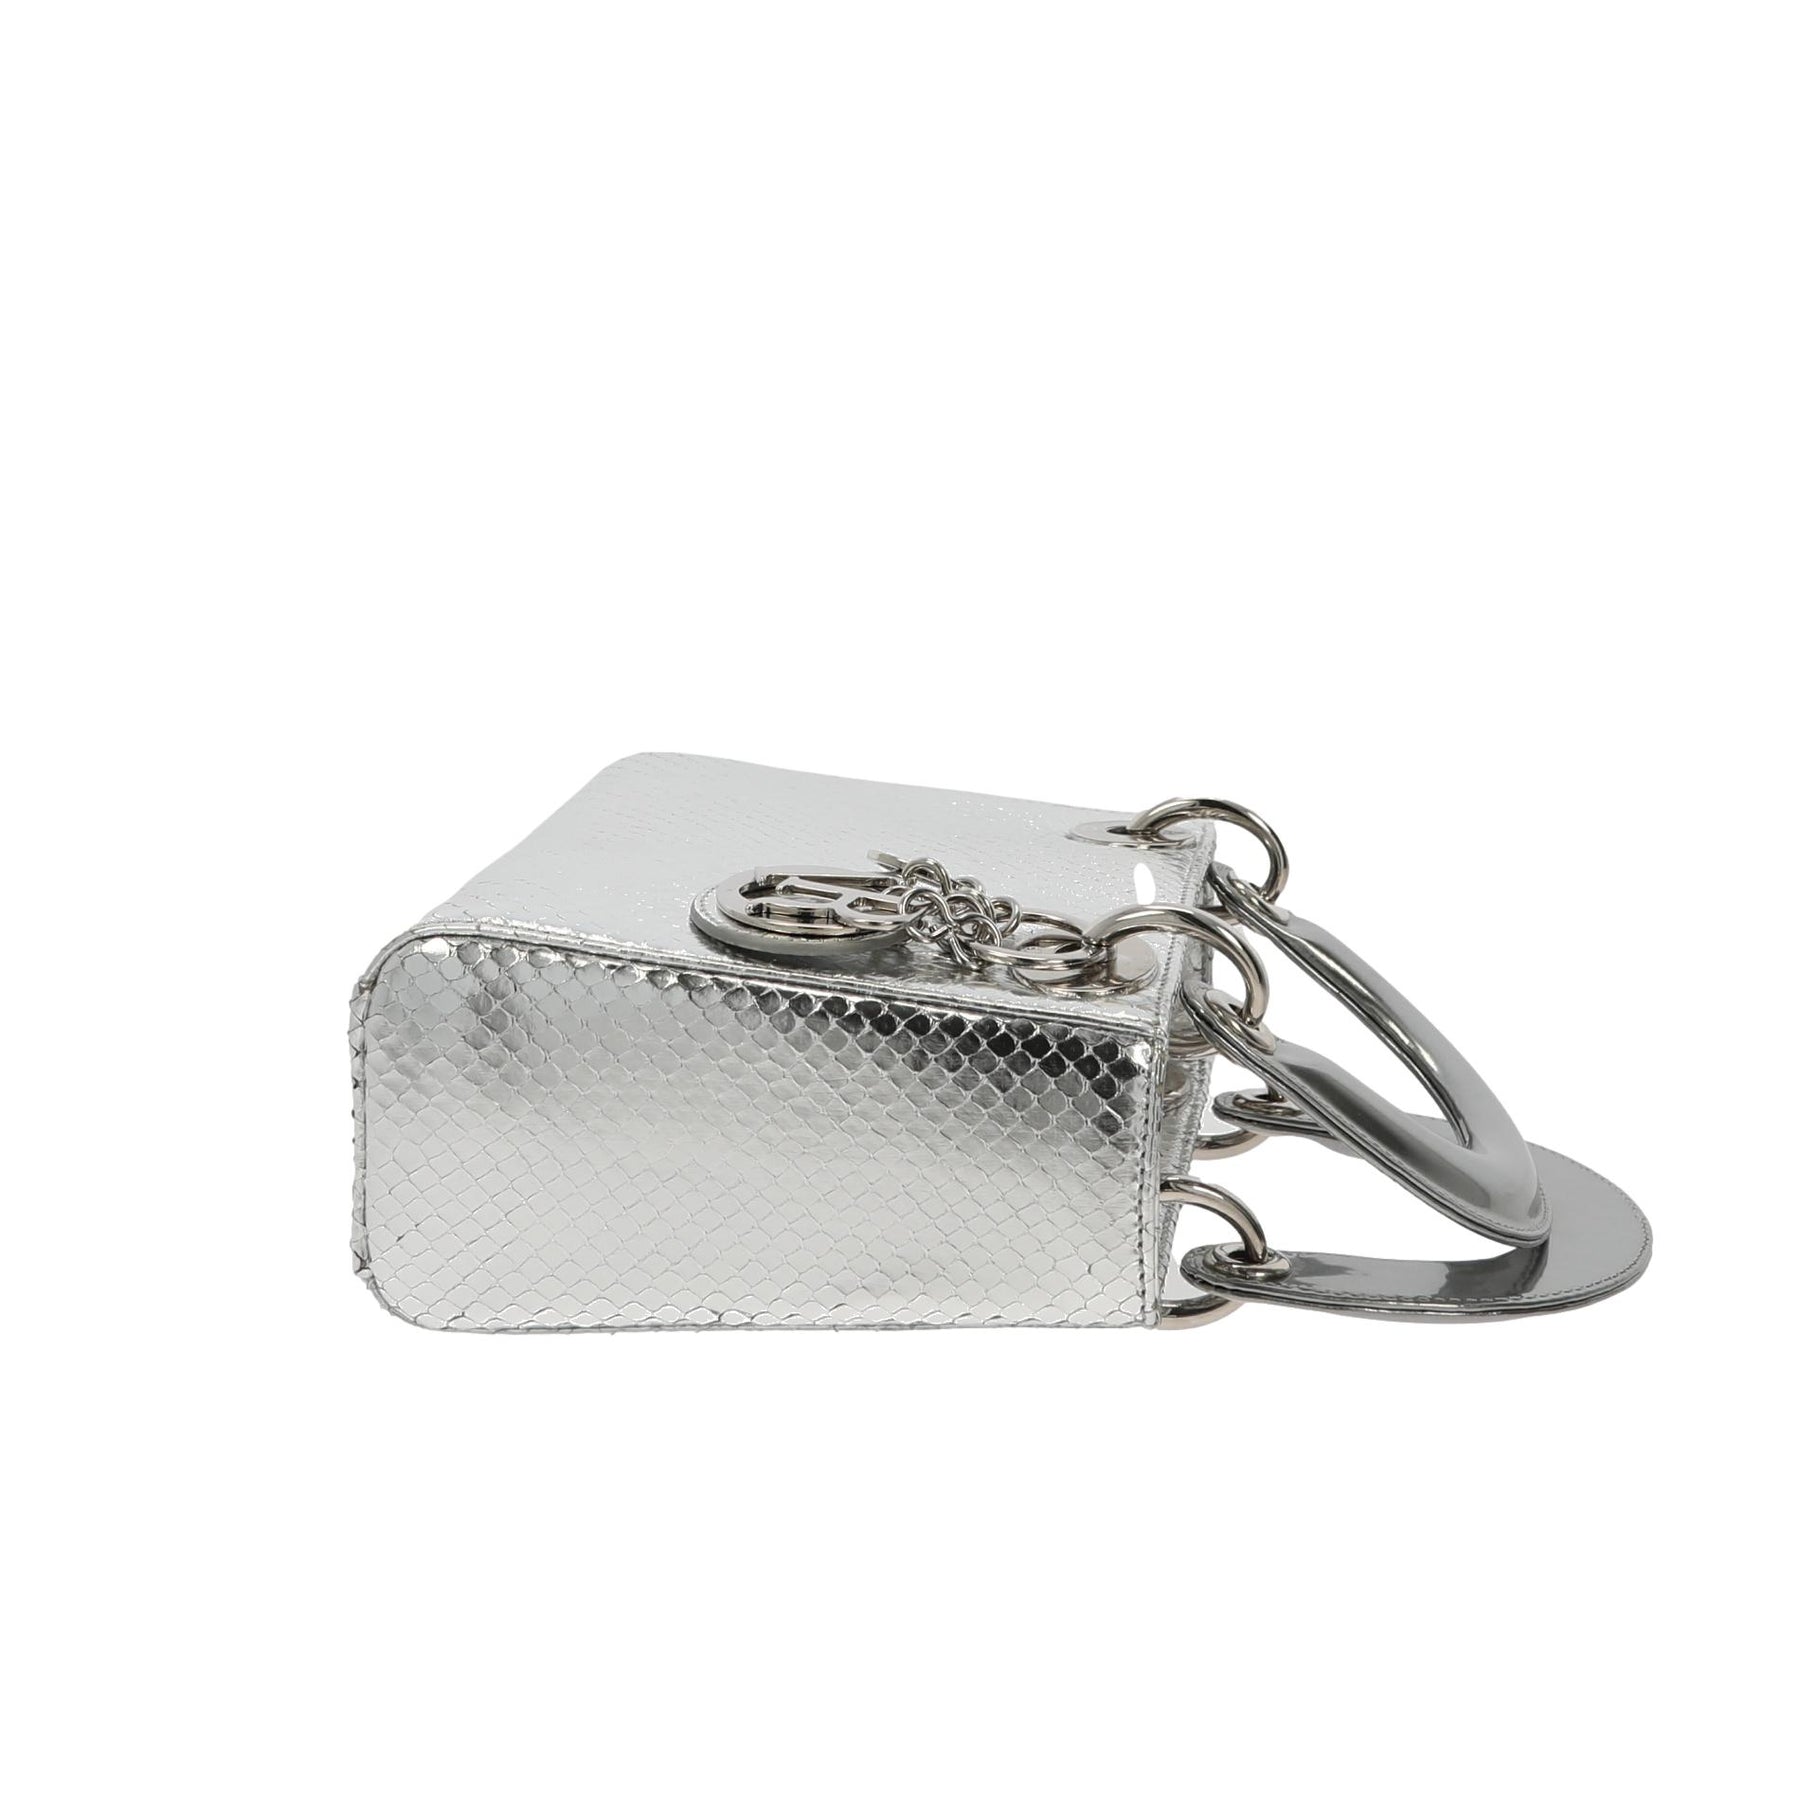 CHRISTIAN DIOR Lady Dior Chain Tote Hand Bag M0955PVR